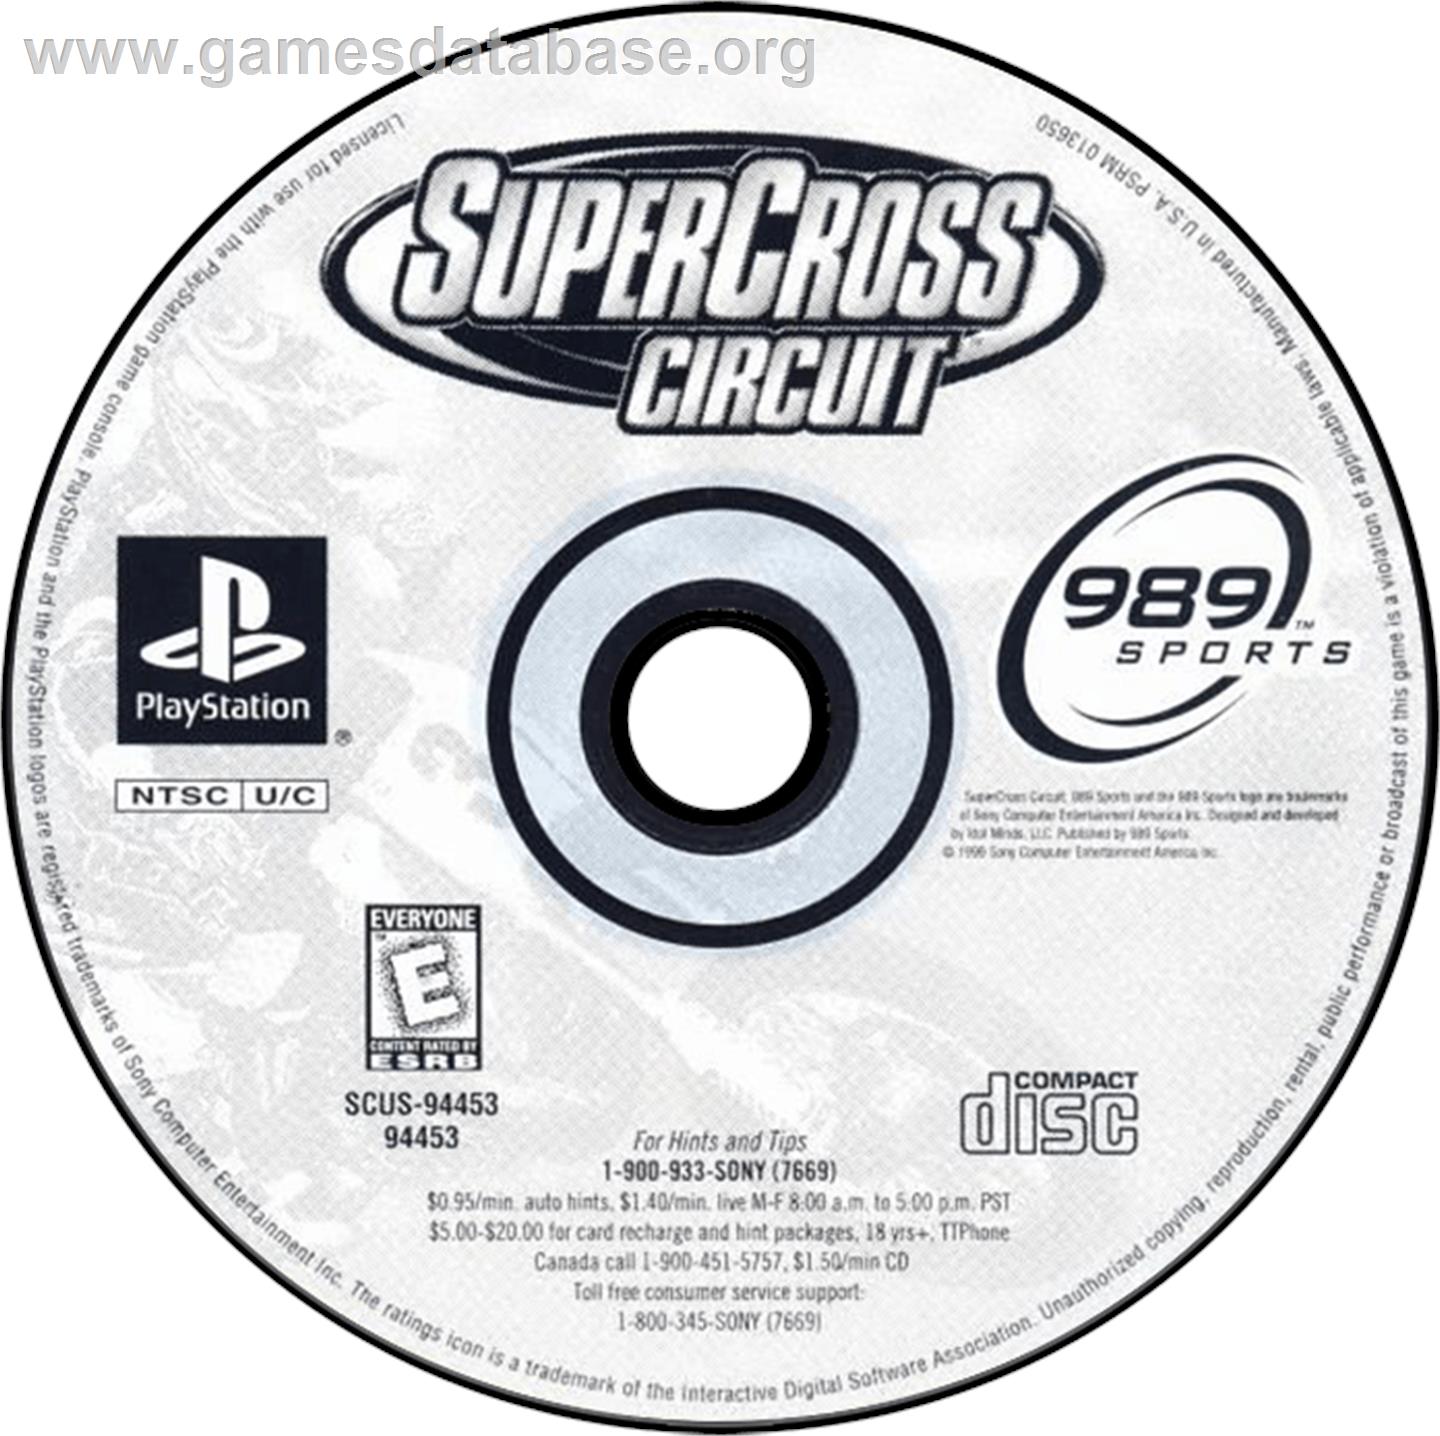 Supercross Circuit - Sony Playstation - Artwork - Disc